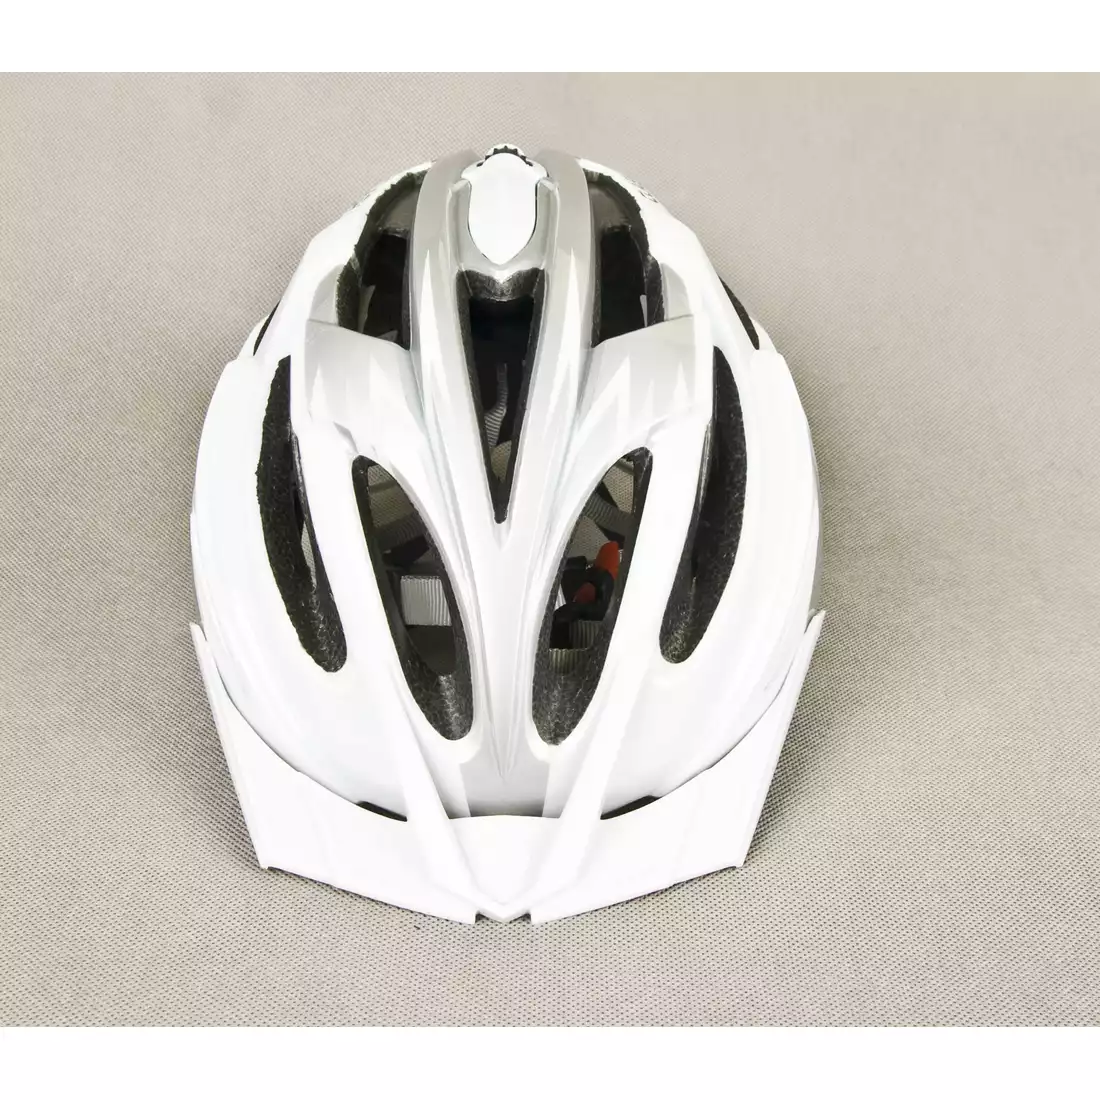 LAZER - CLASH kask rowerowy MTB, kolor: white silver